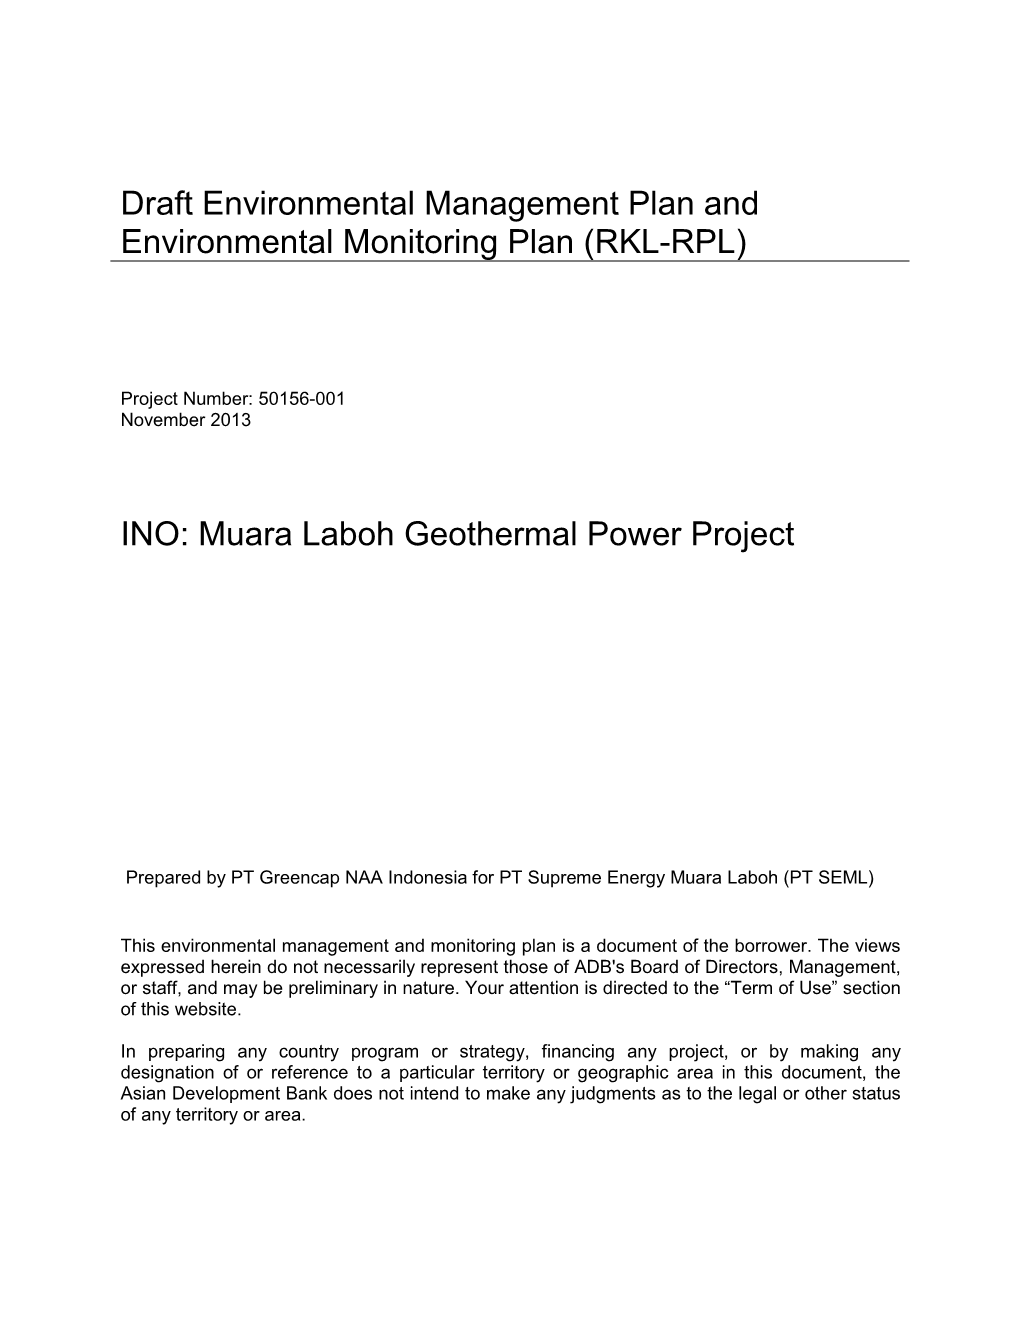 Muara Laboh Geothermal Power Project